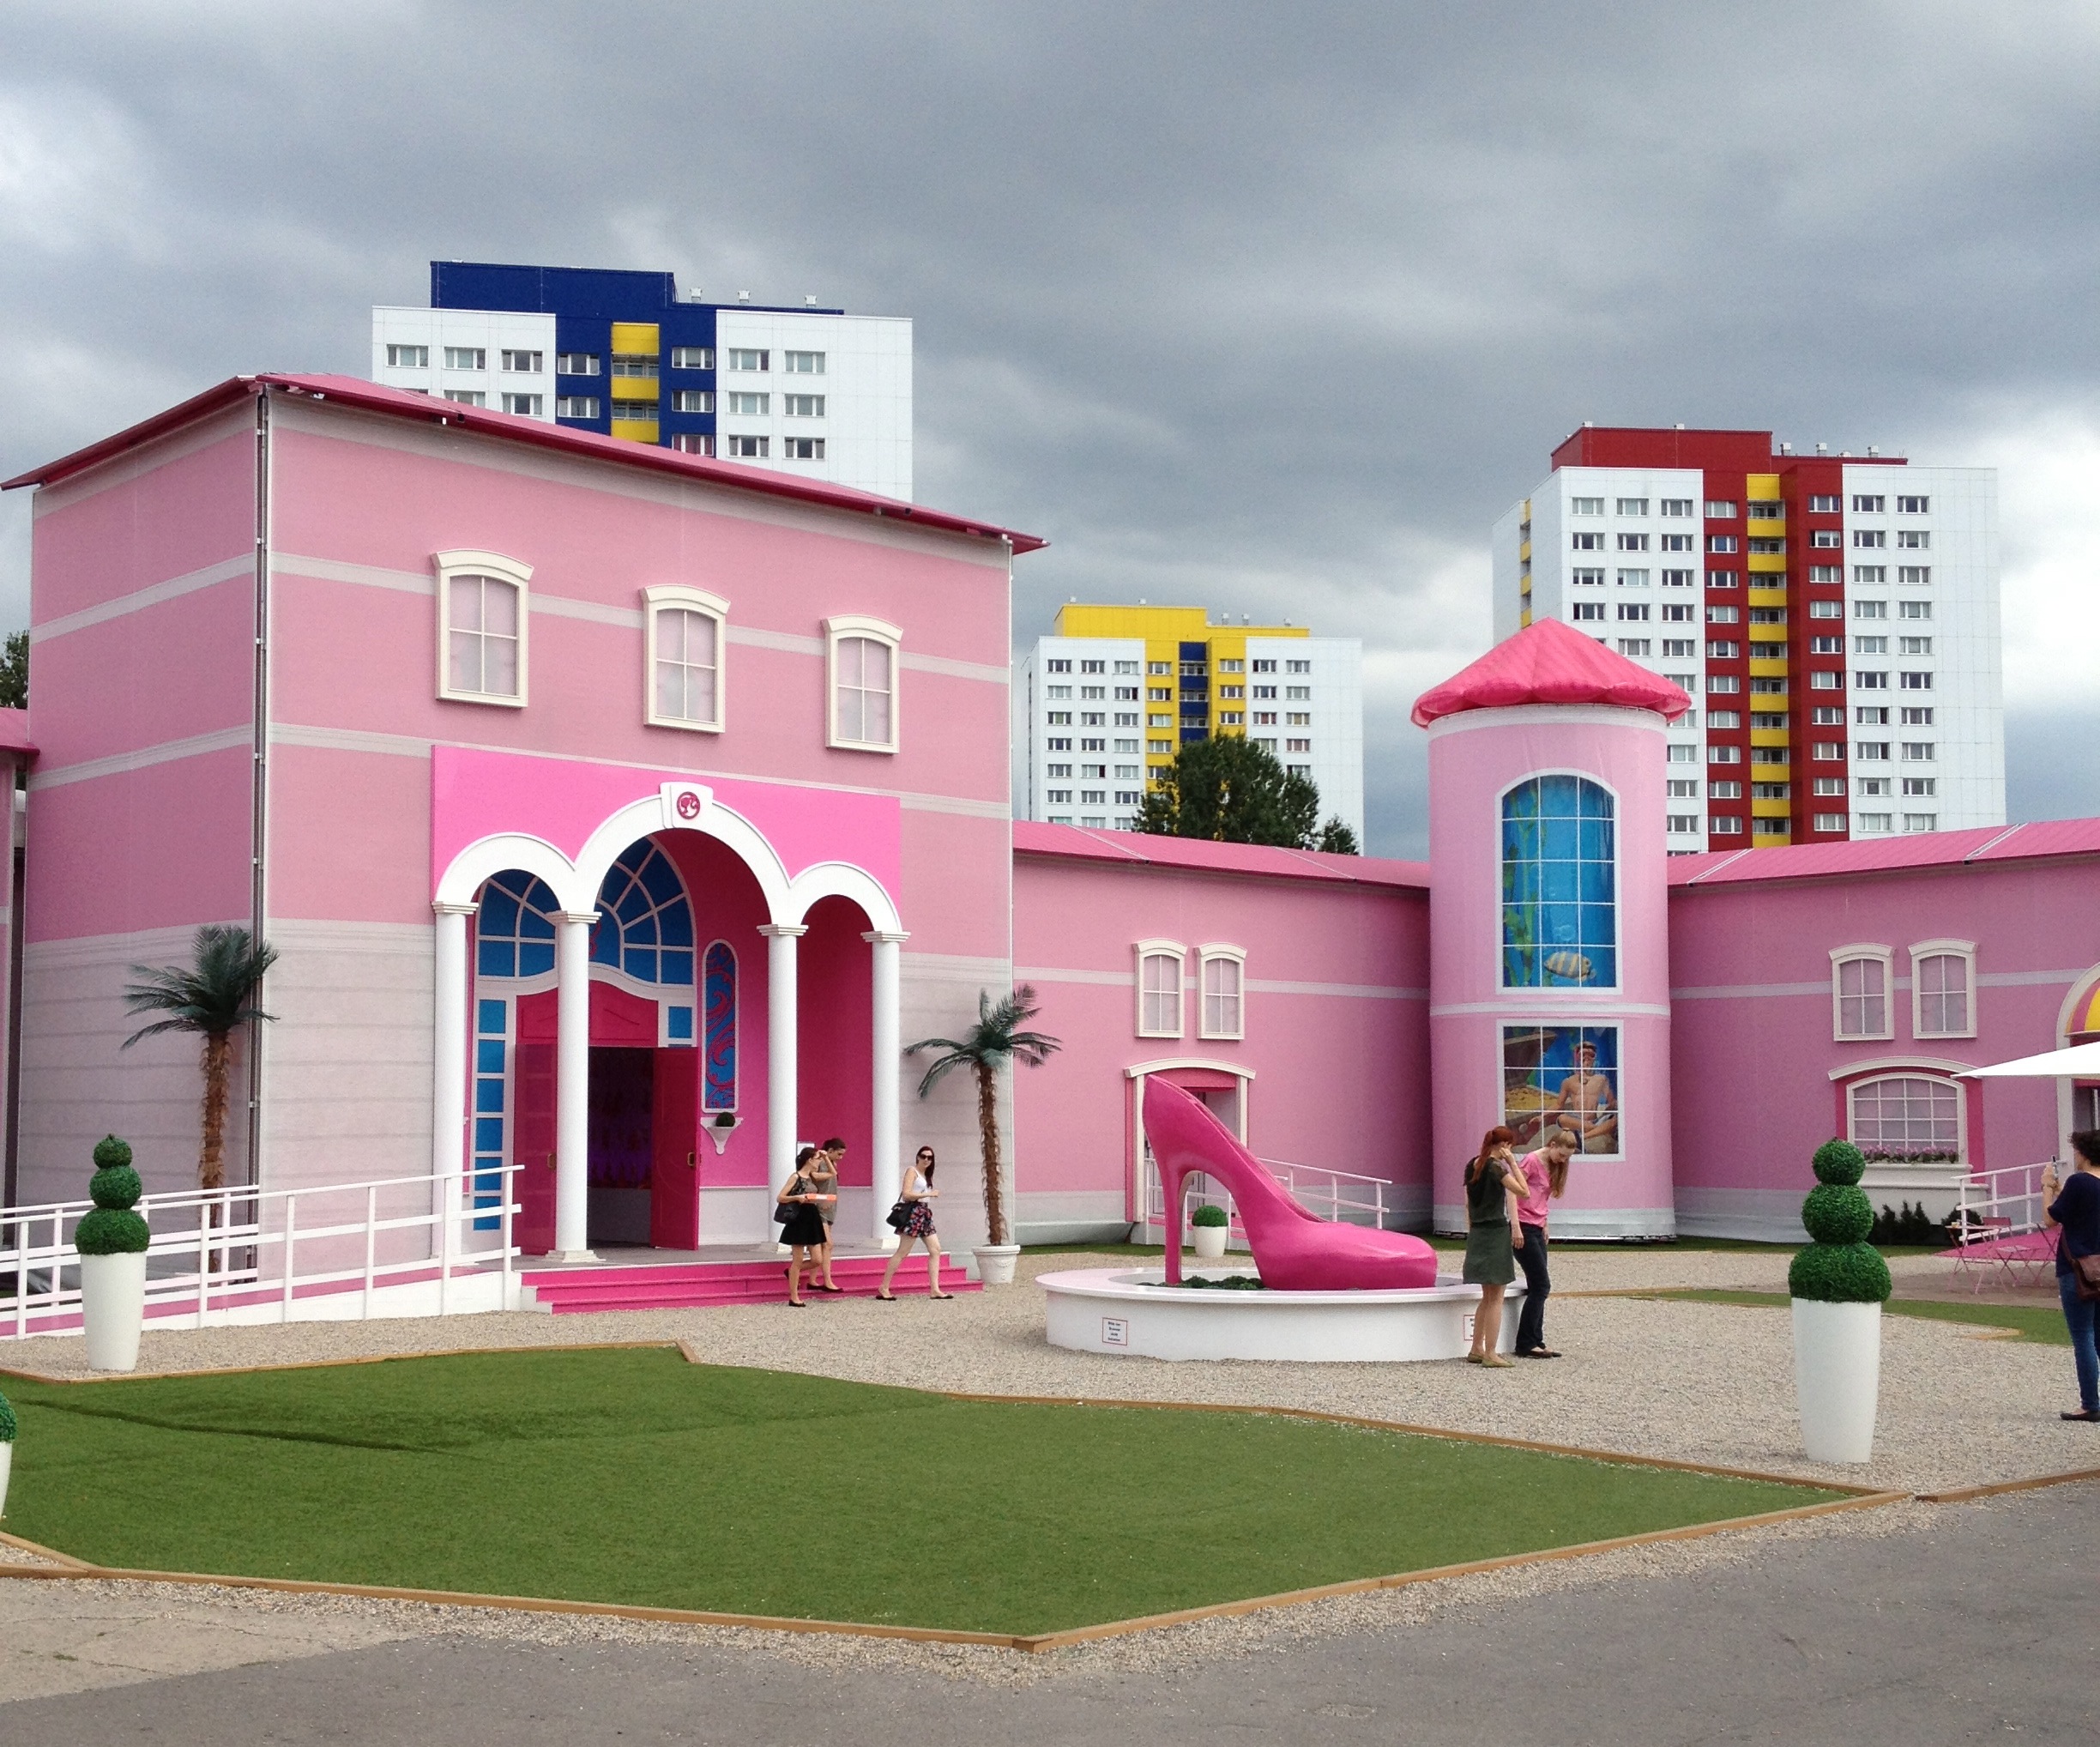 barbie mansion real life